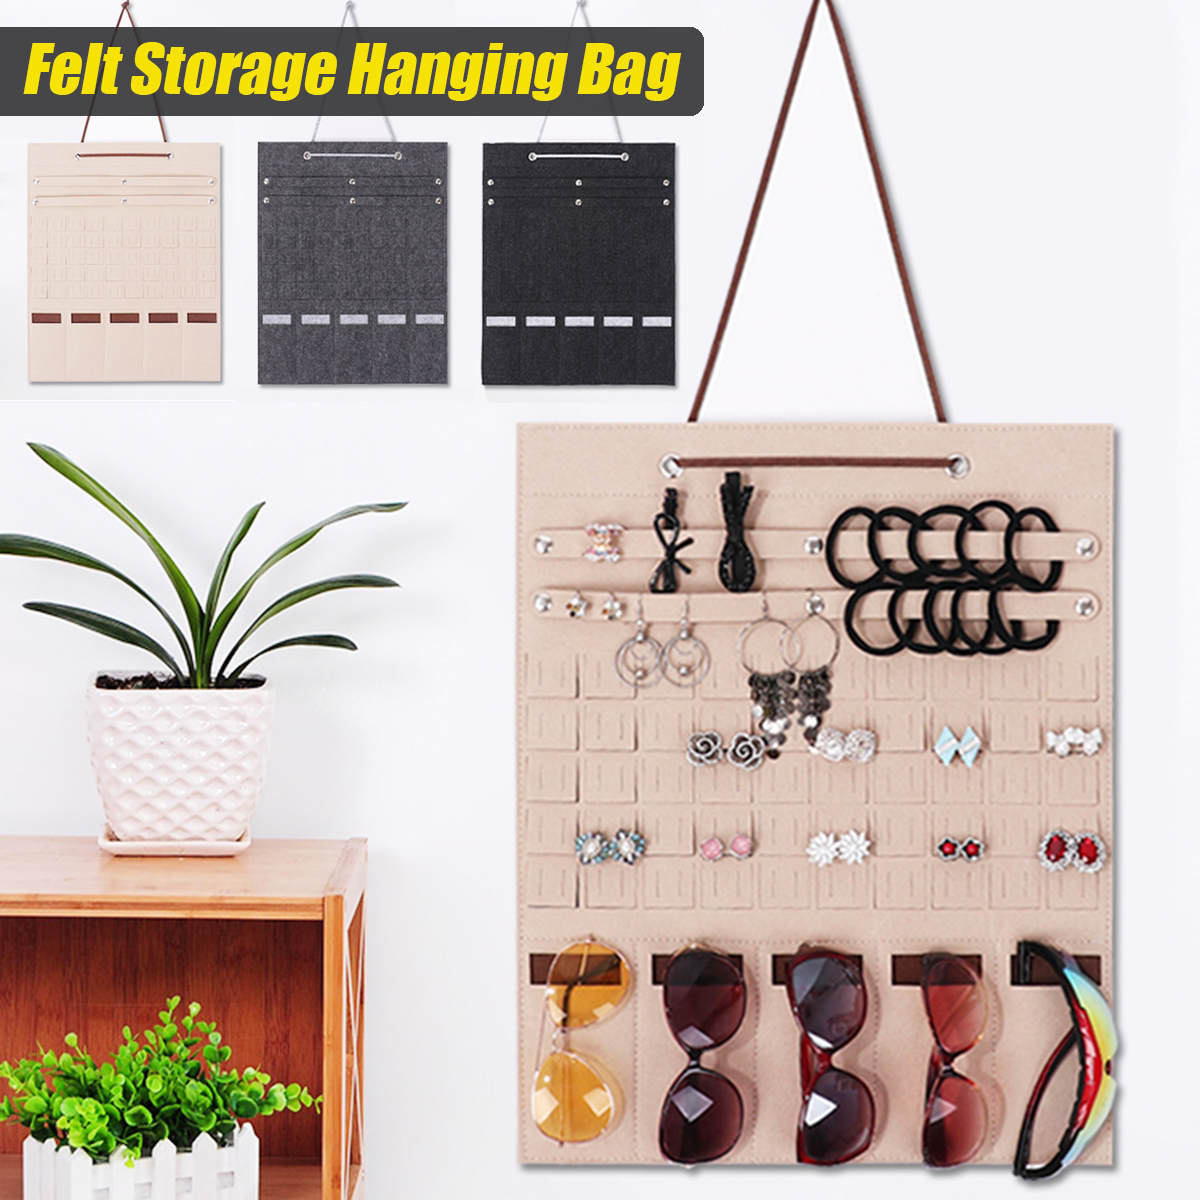 Slots-Felt-Sunglasses-Jewelry-Wall-Hanging-Bag-Organizer-Storage-Pocket-Display-1587251-2